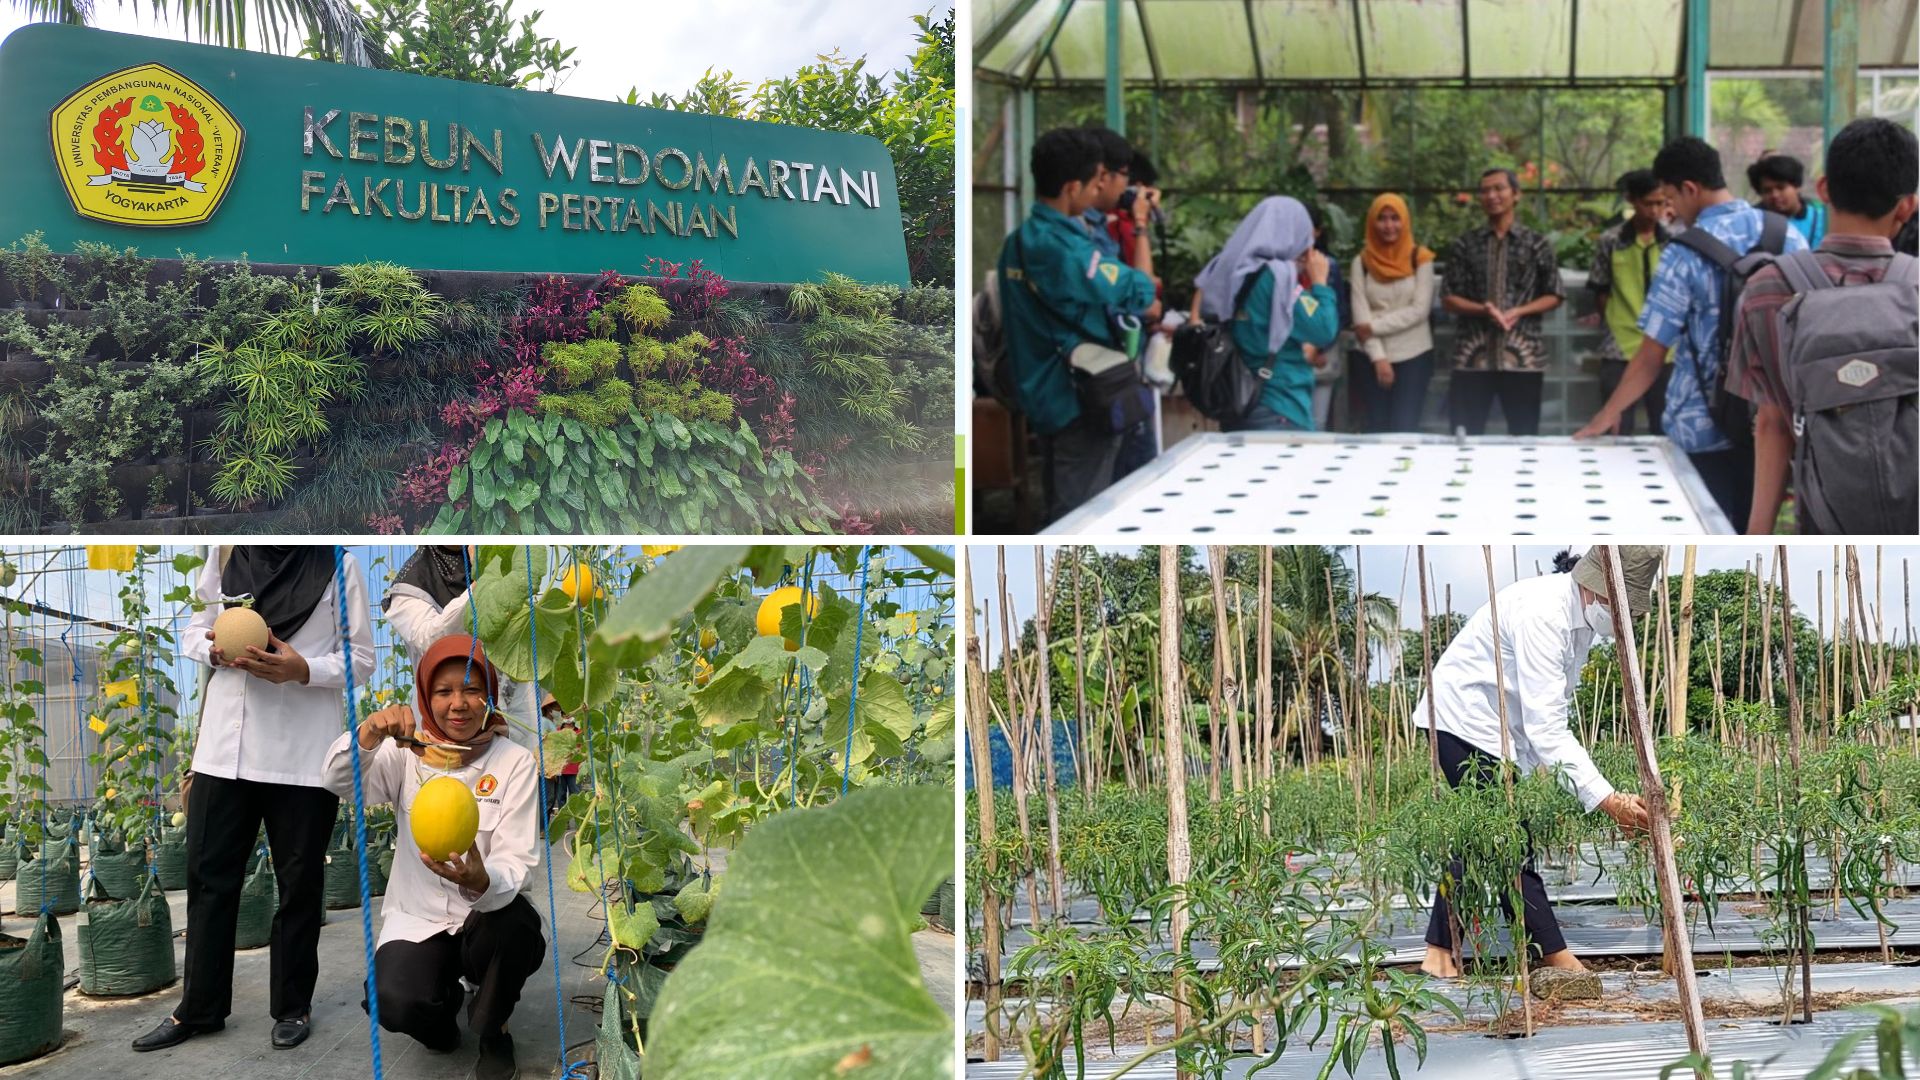 Kebun Percobaan Wedomartani Fakultas Pertanian UPN "Veteran" Yogyakarta